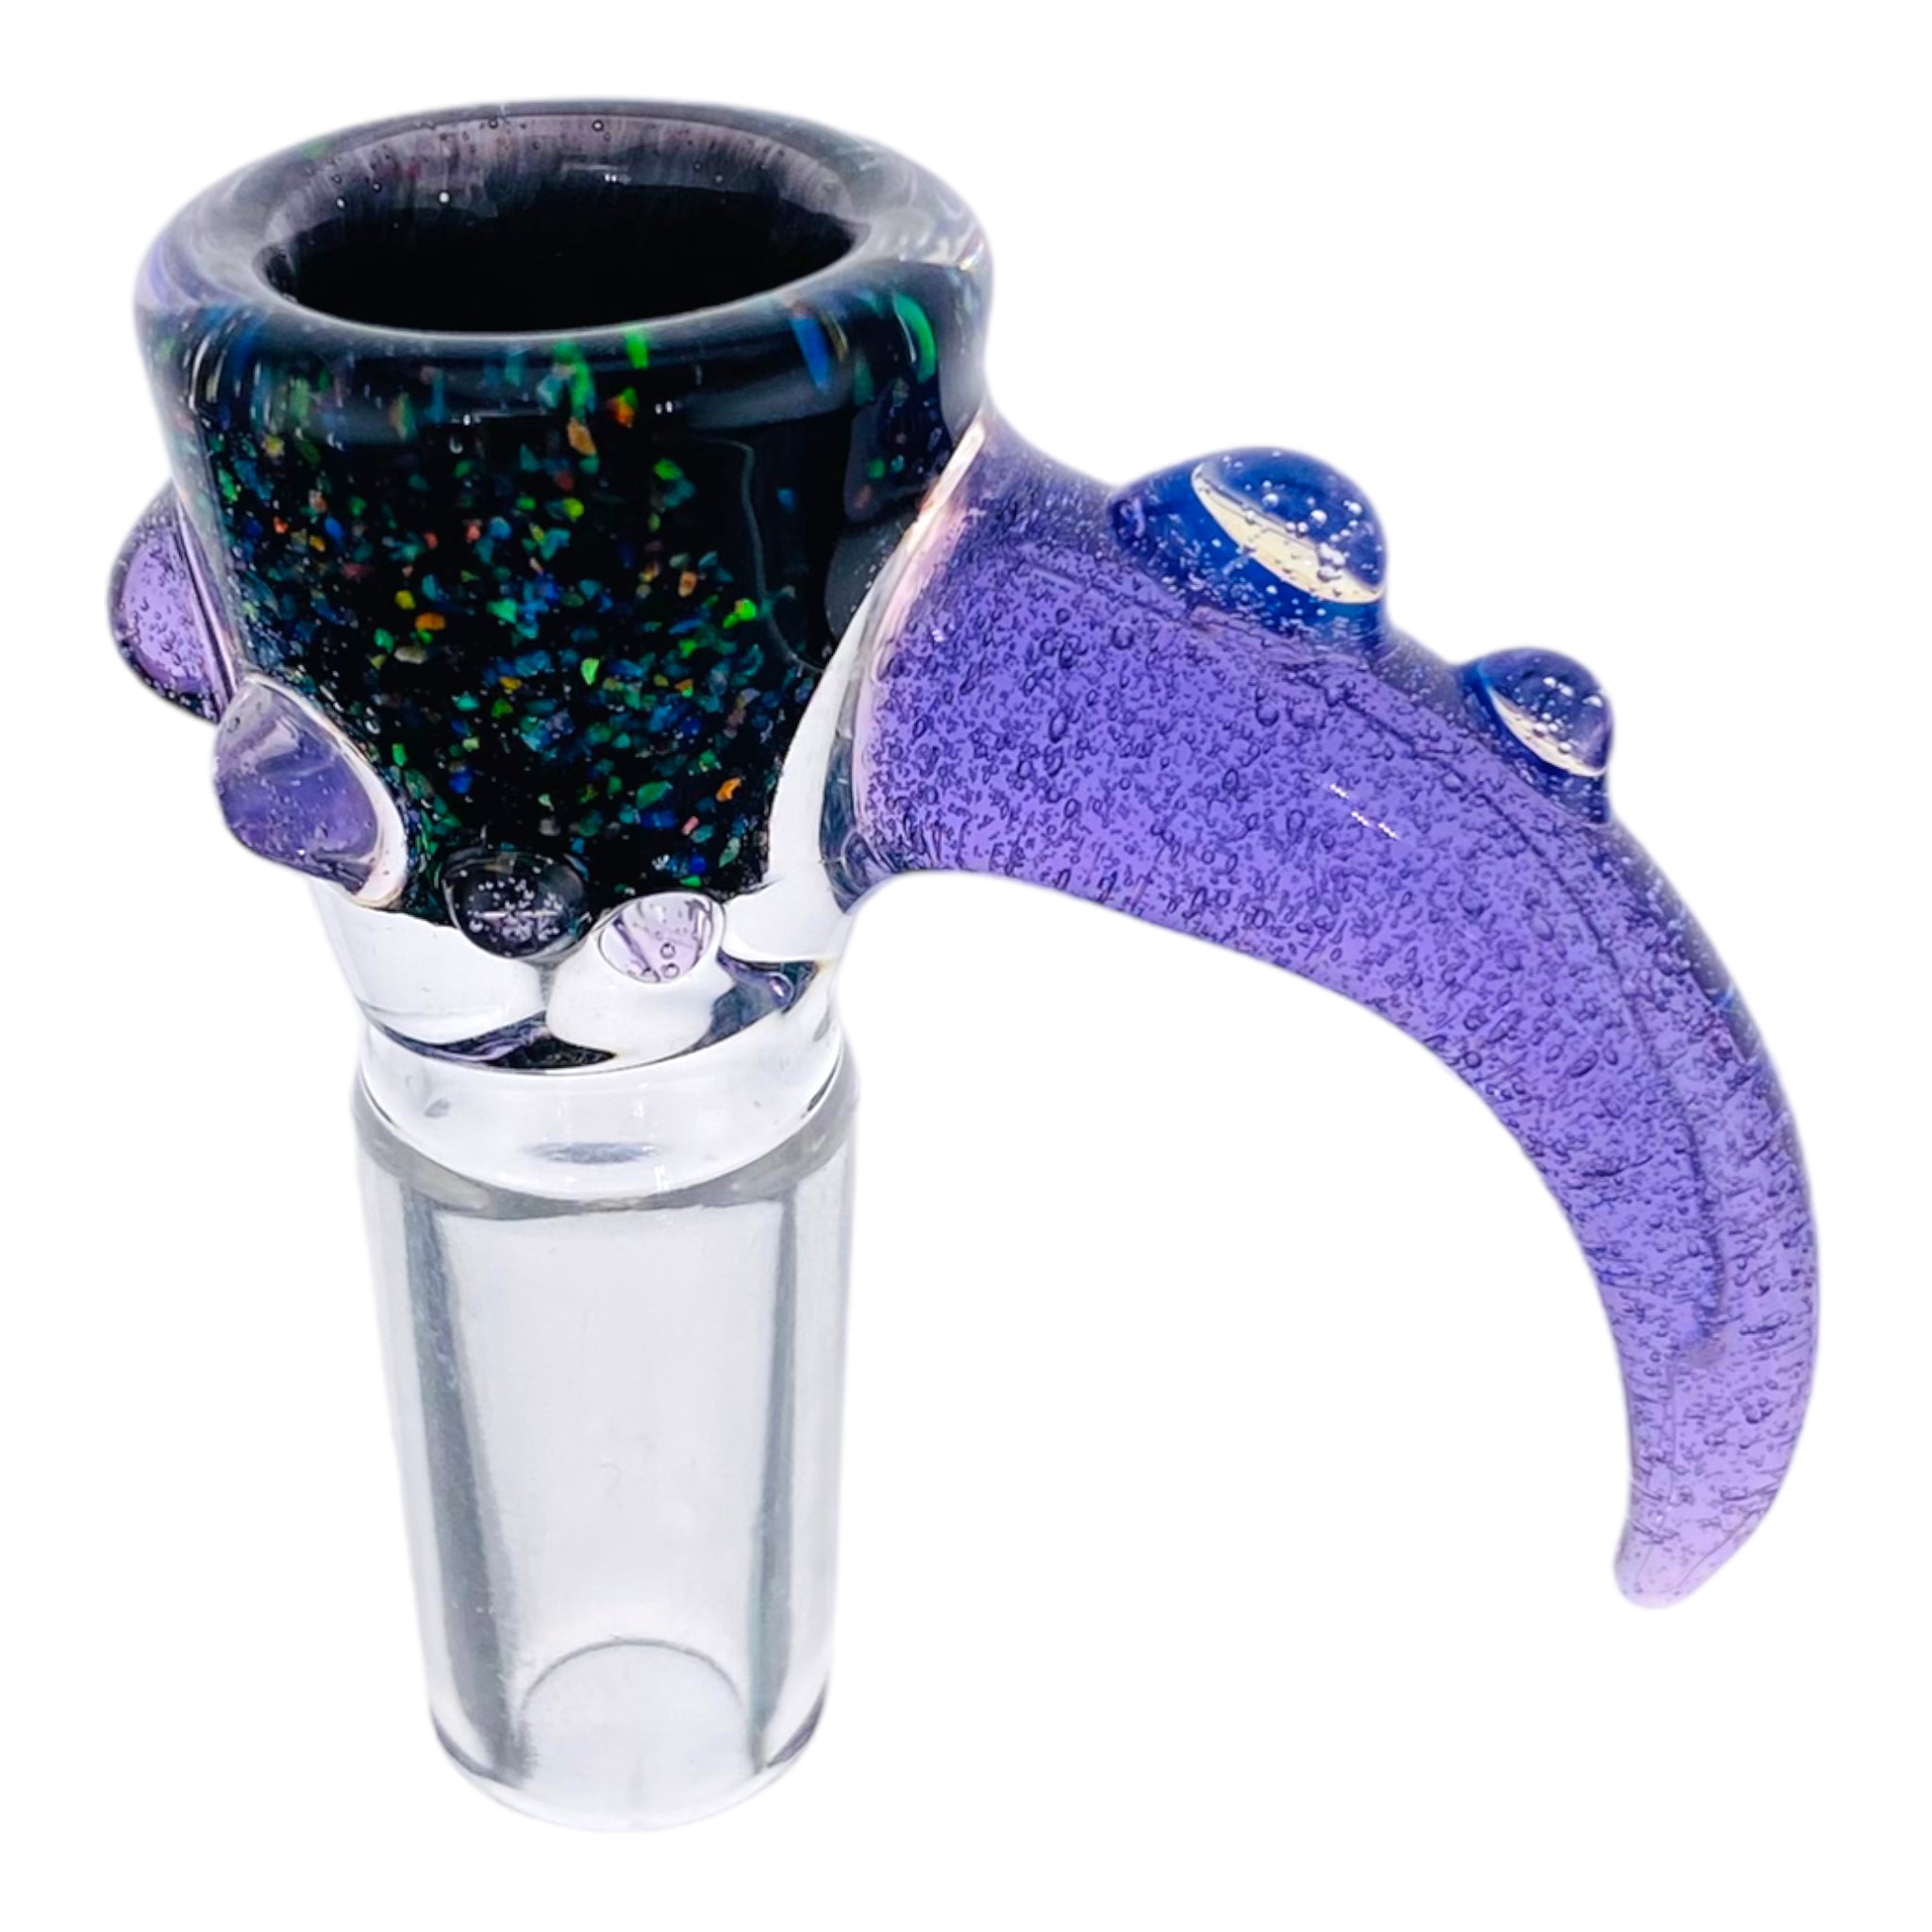 Arko Glass - 14mm Flower Bowl - Chrush Opal Bowl With Chronic Purple Handle